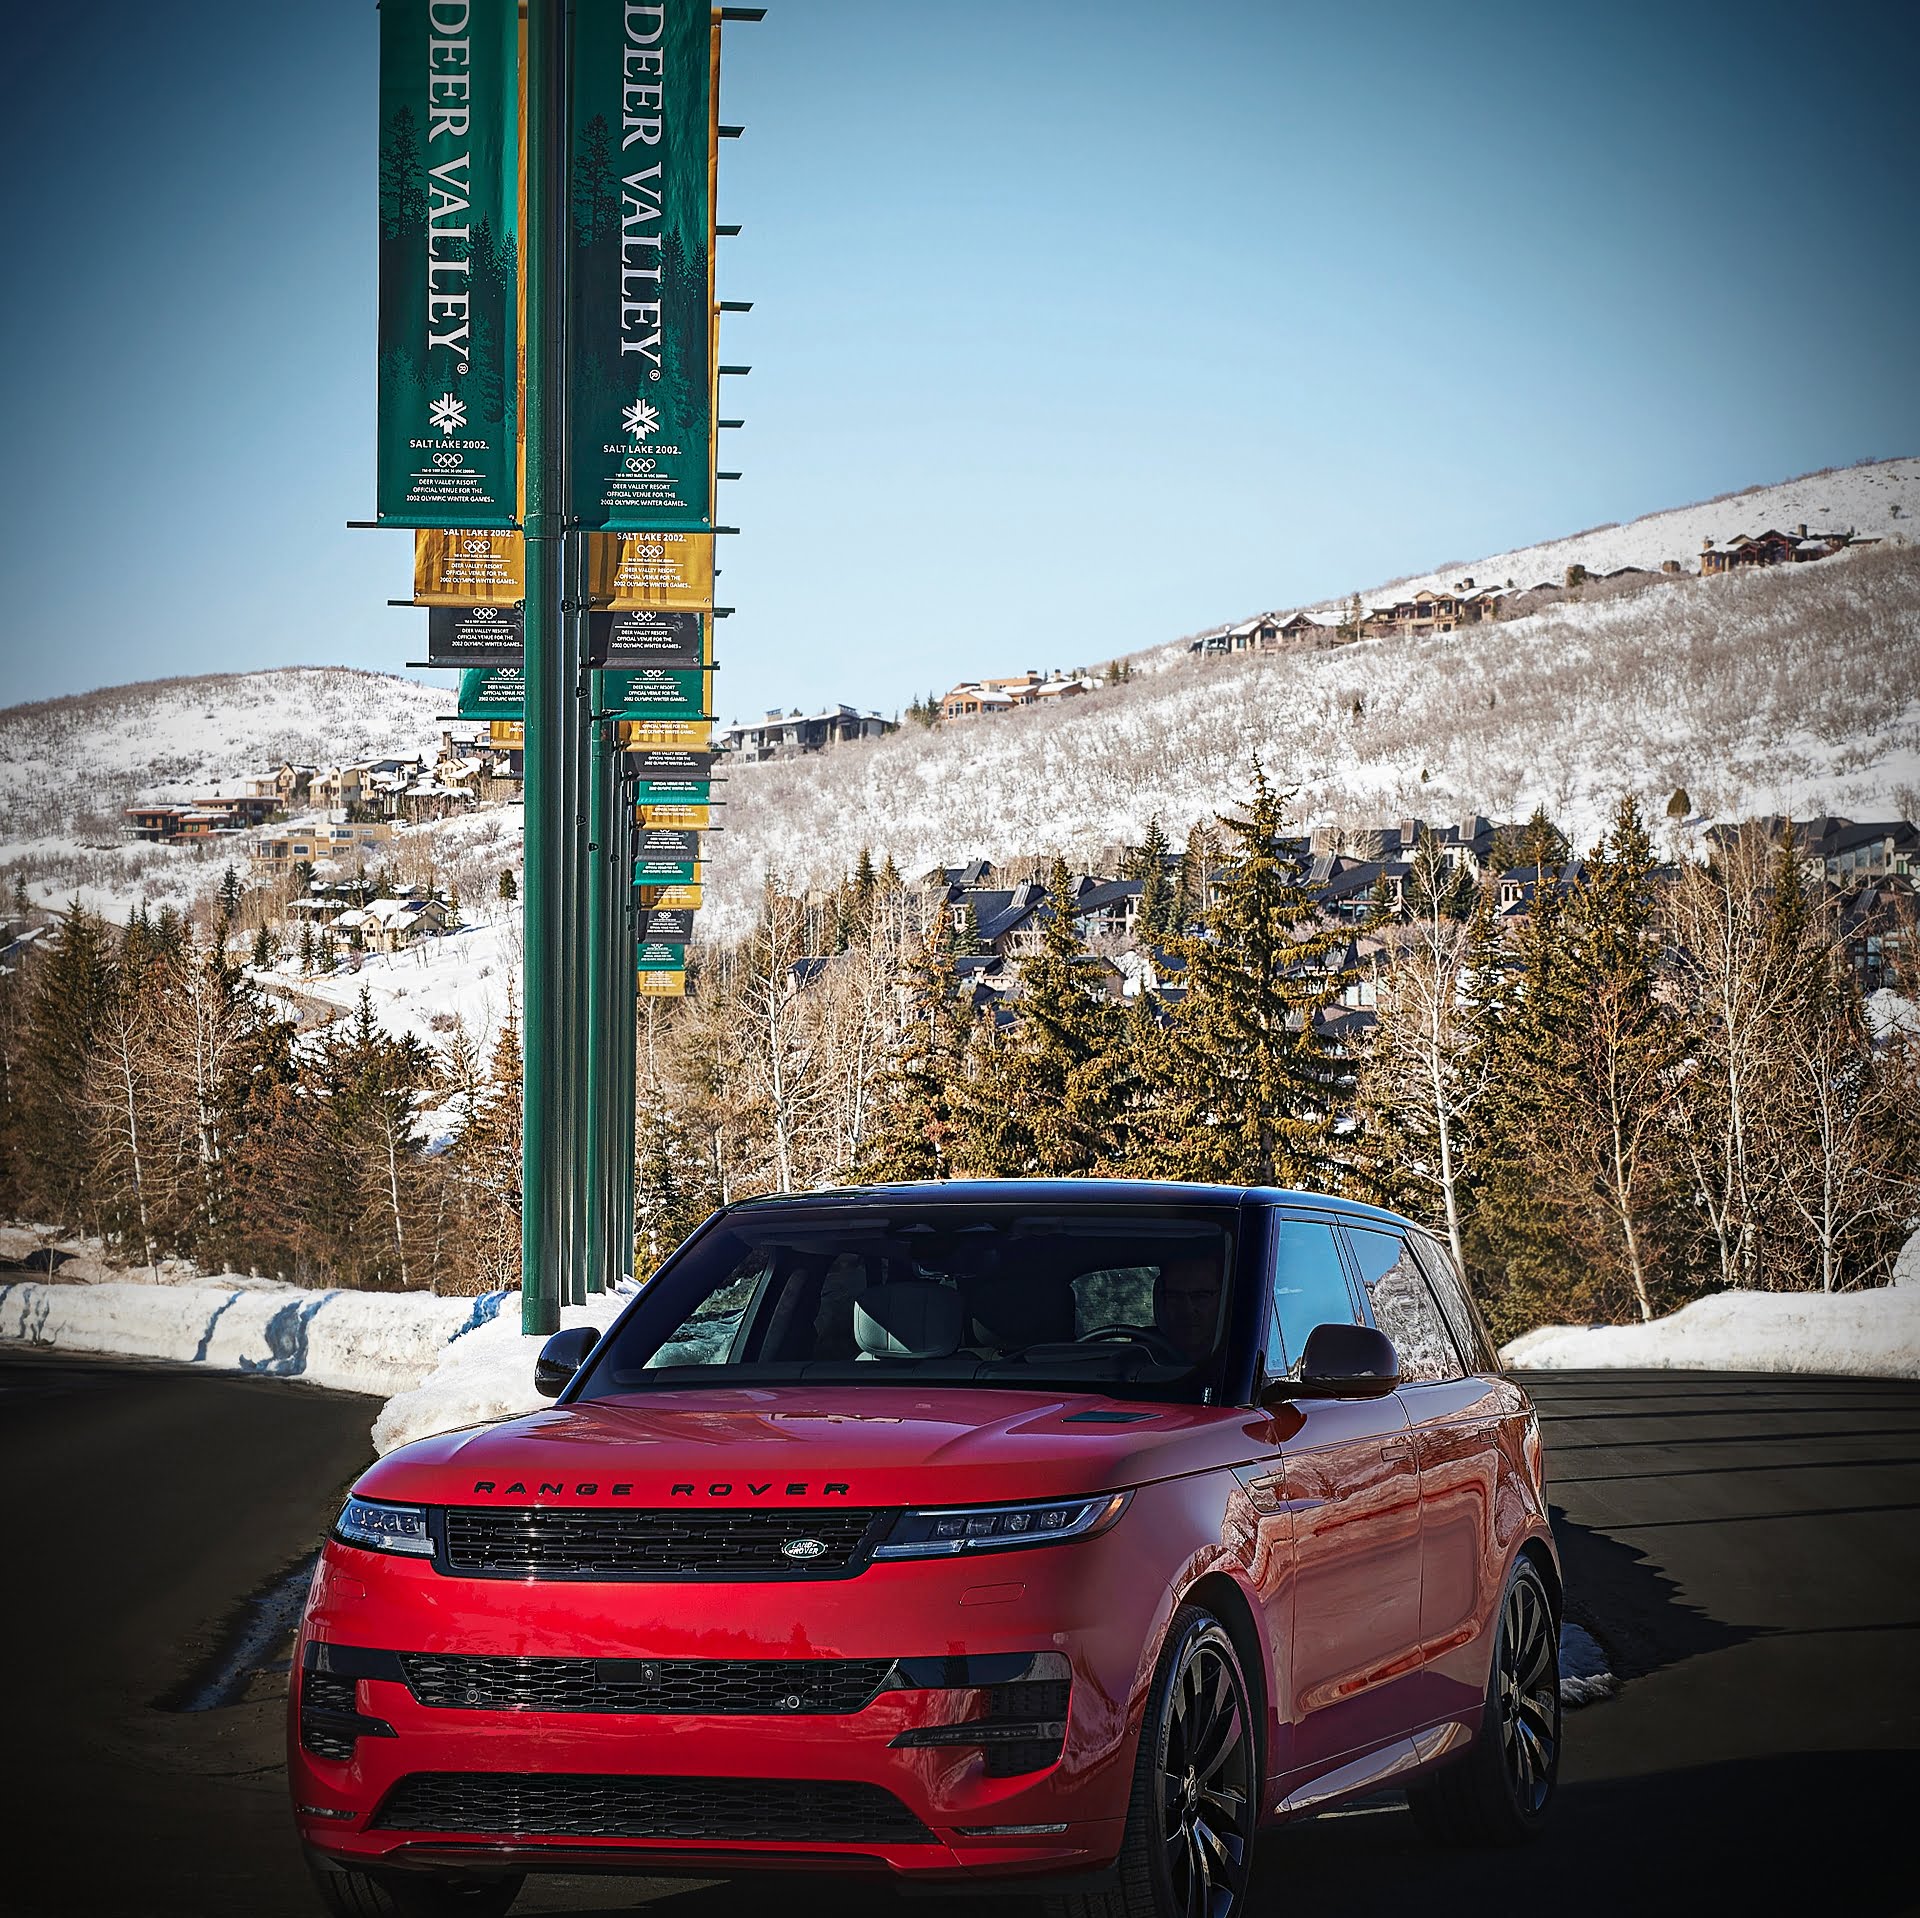 Range Rover and Deer Valley Resort partnership via 360 magazine.